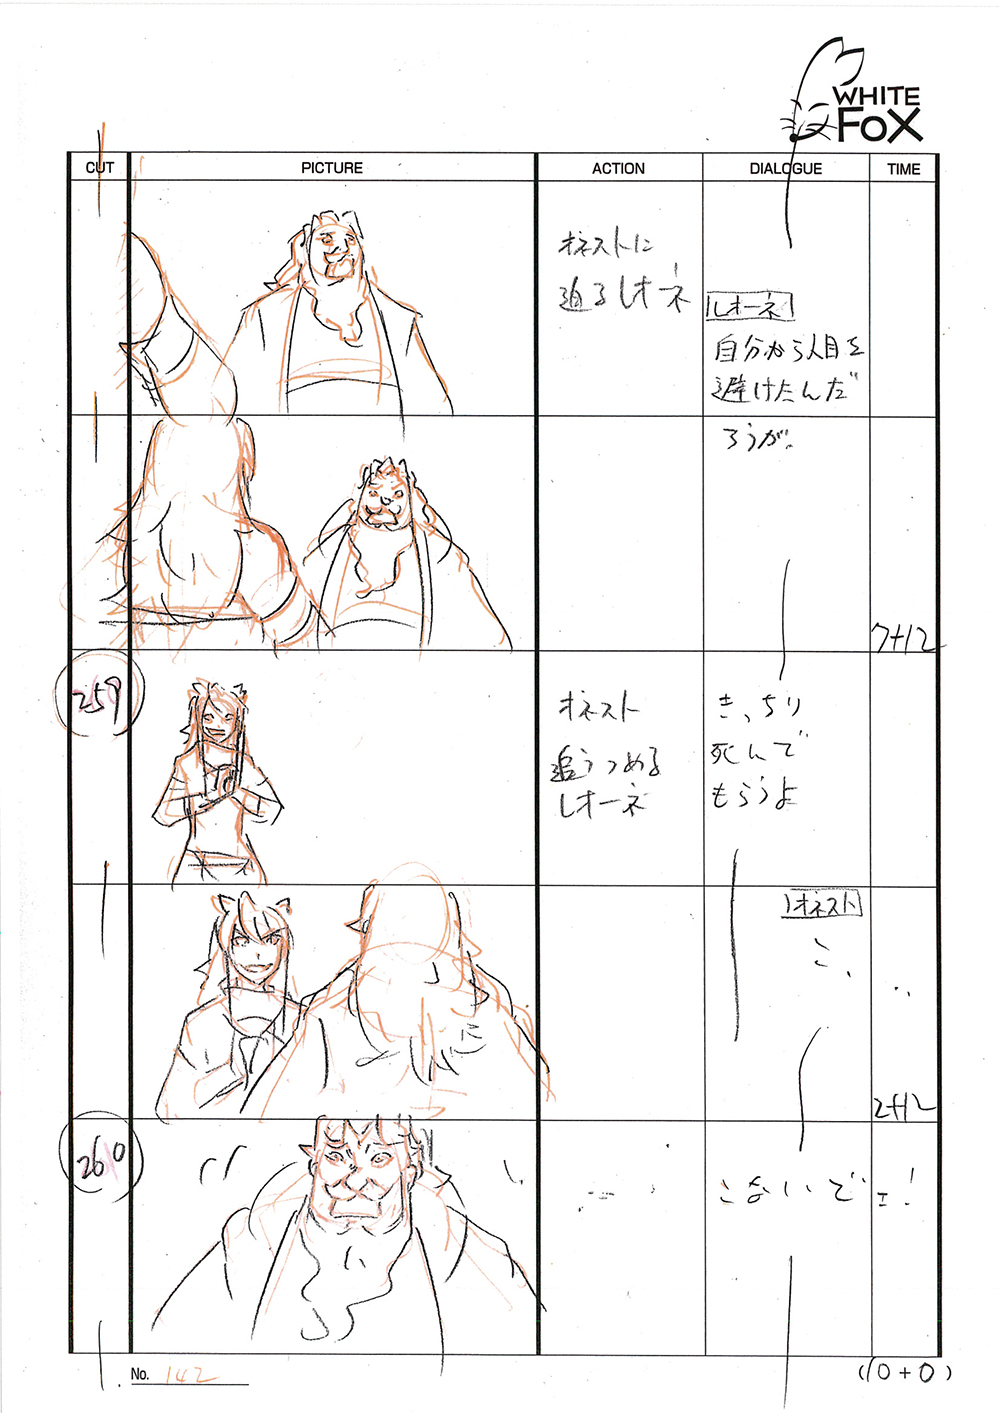 Akame ga Kill Episode 24 Storyboard Leak 147